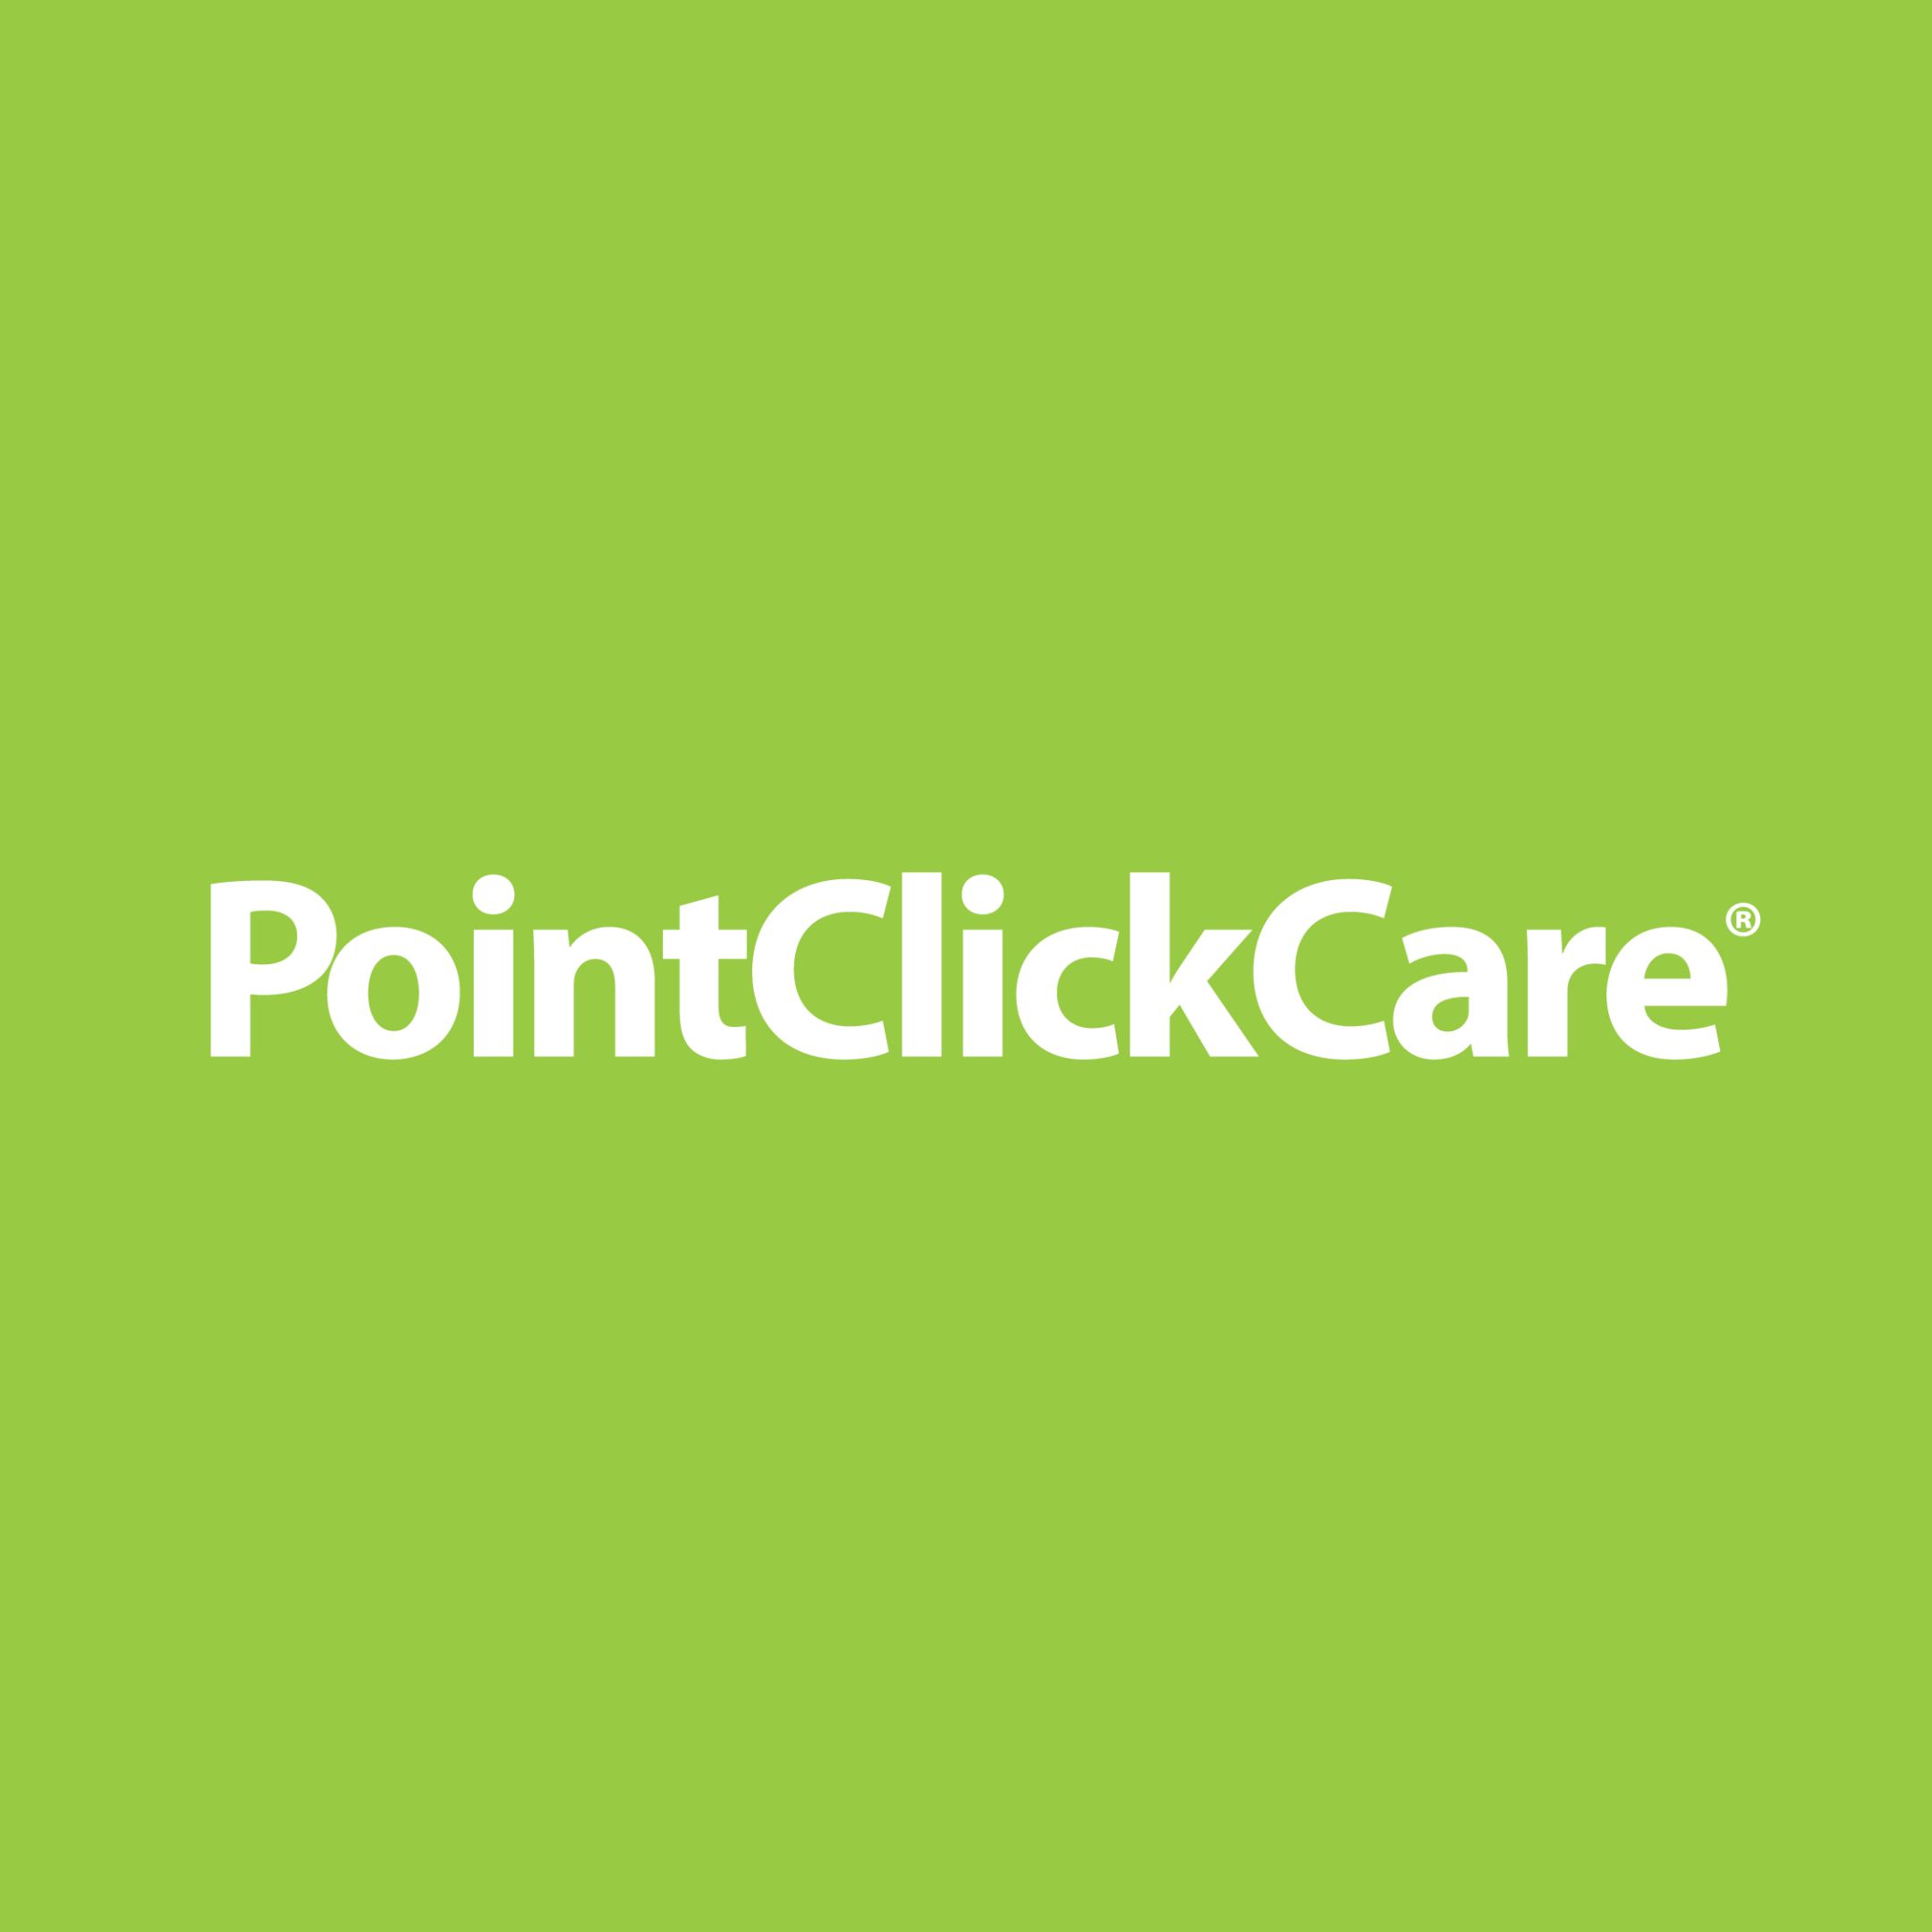 PointClickCare-logo-jpg